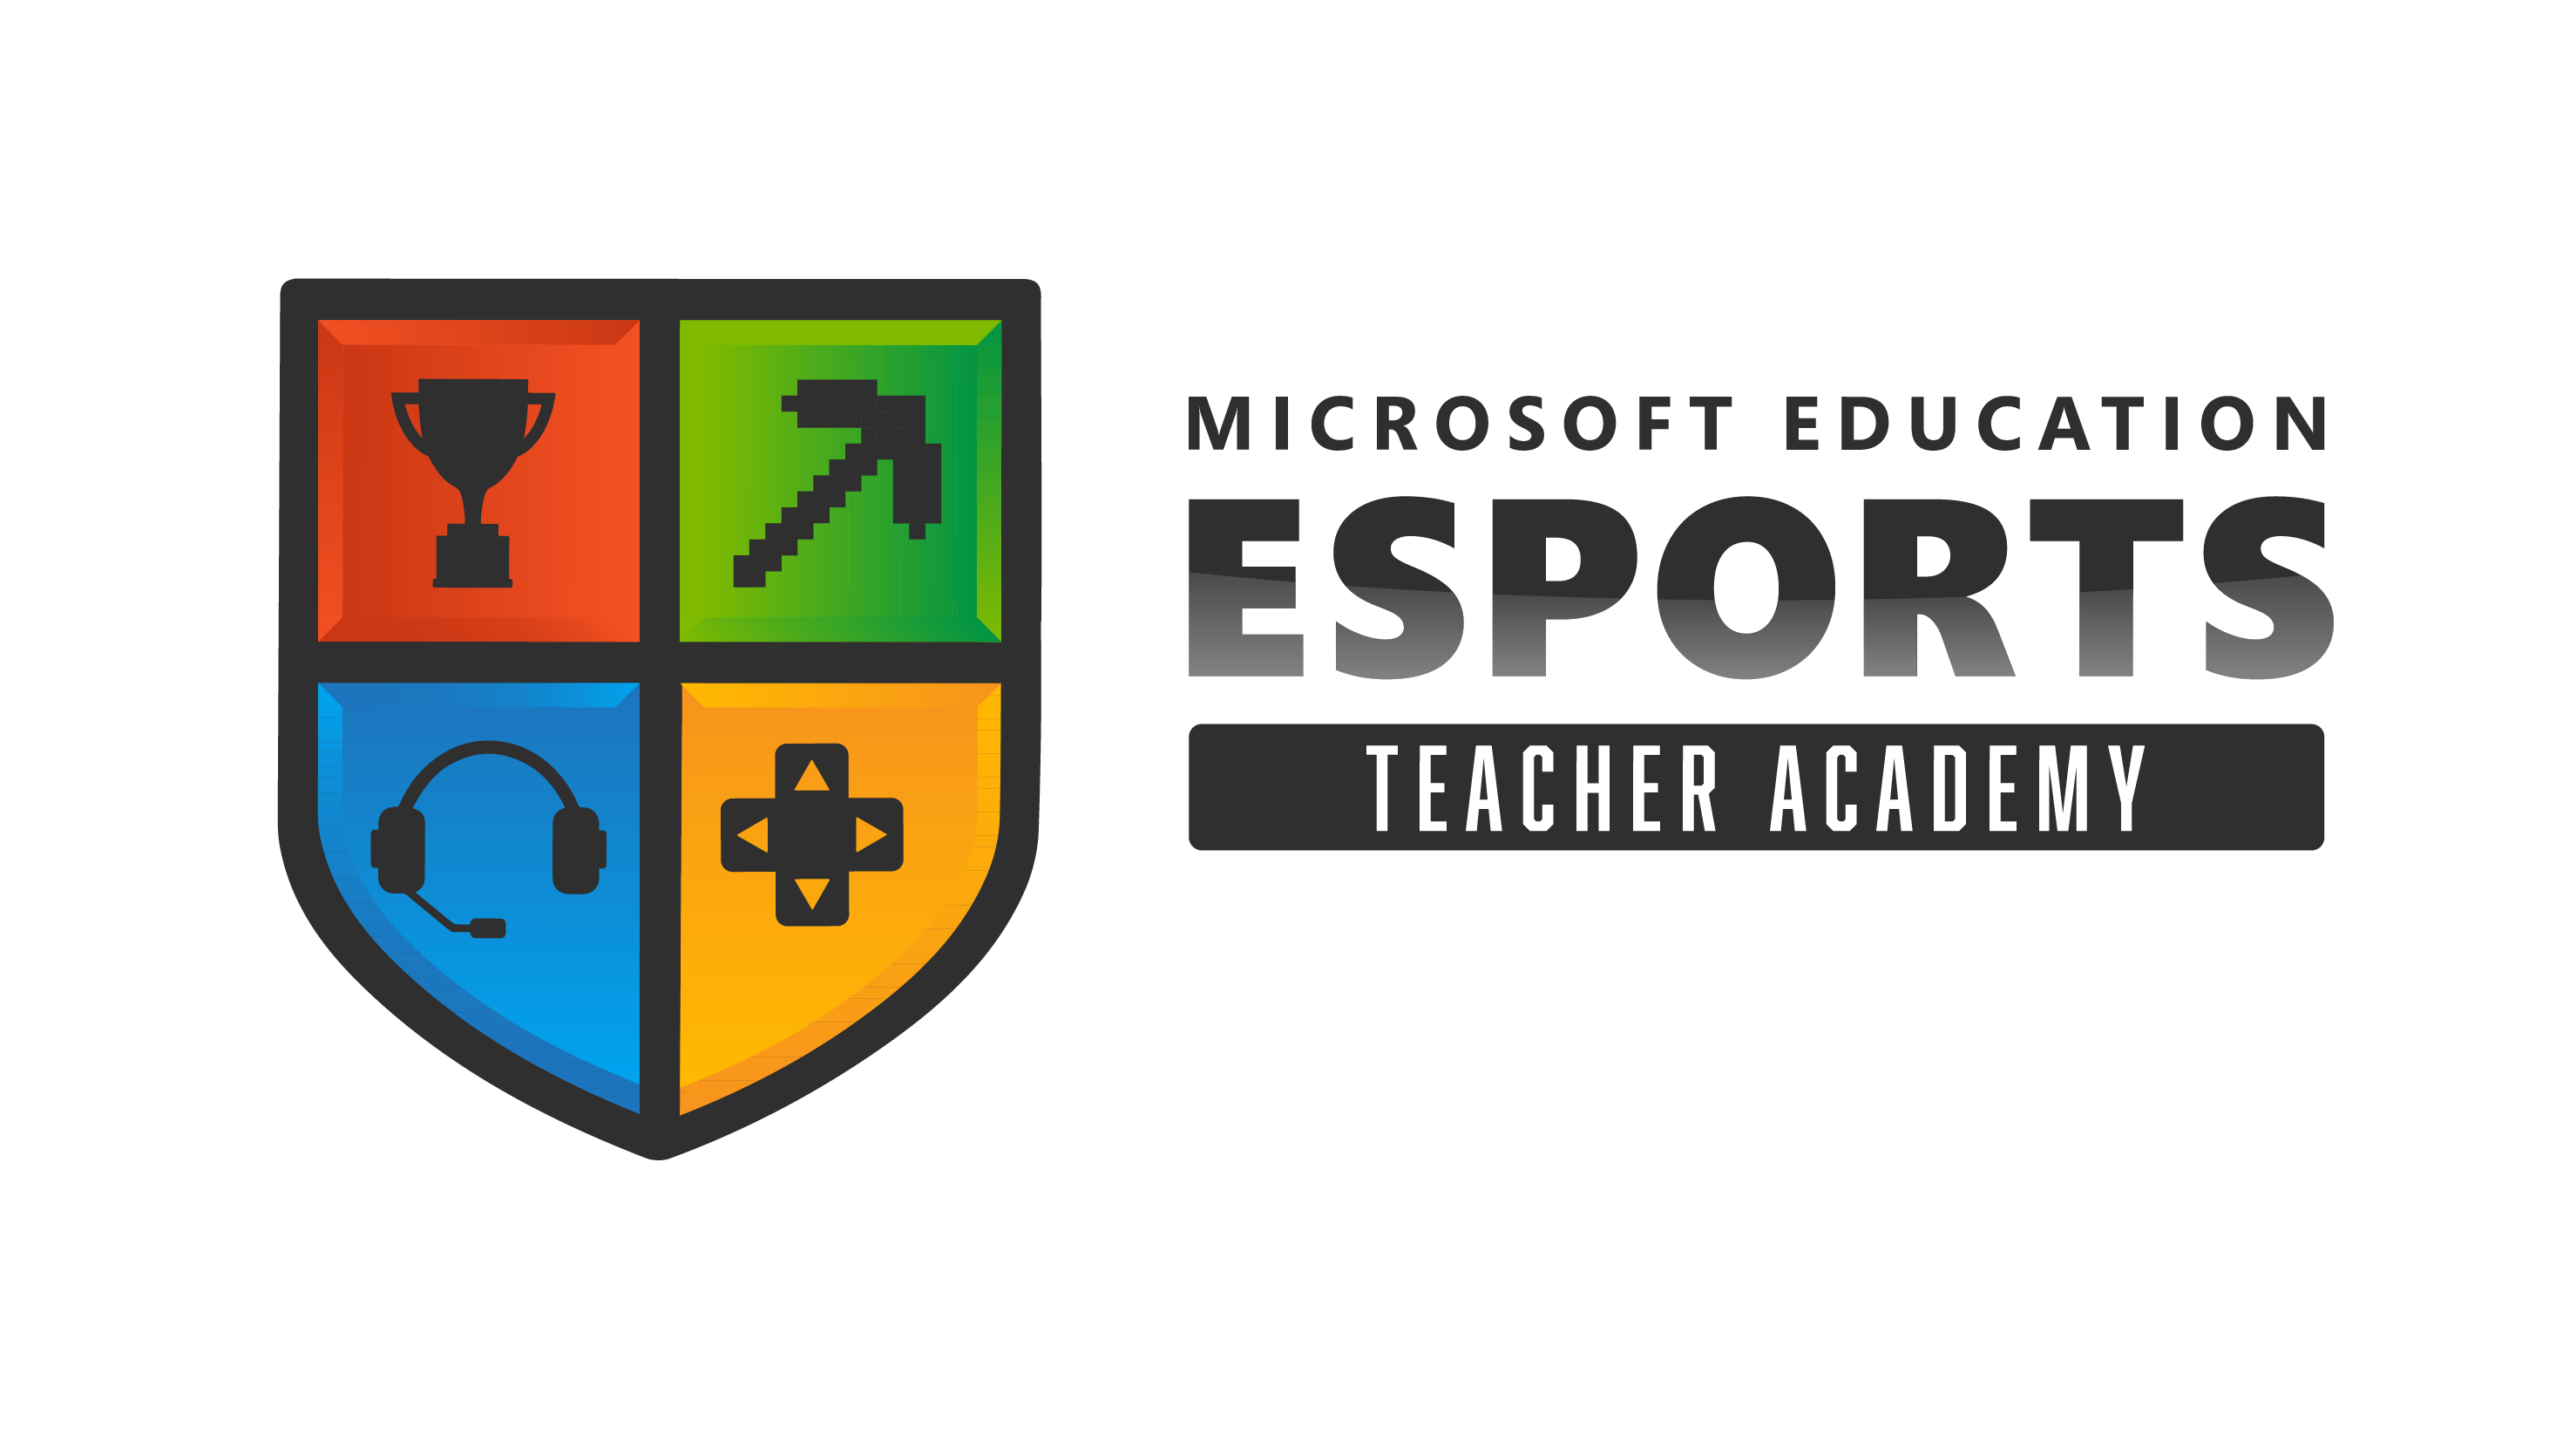 Microsoft Education Esports Teacher Academy